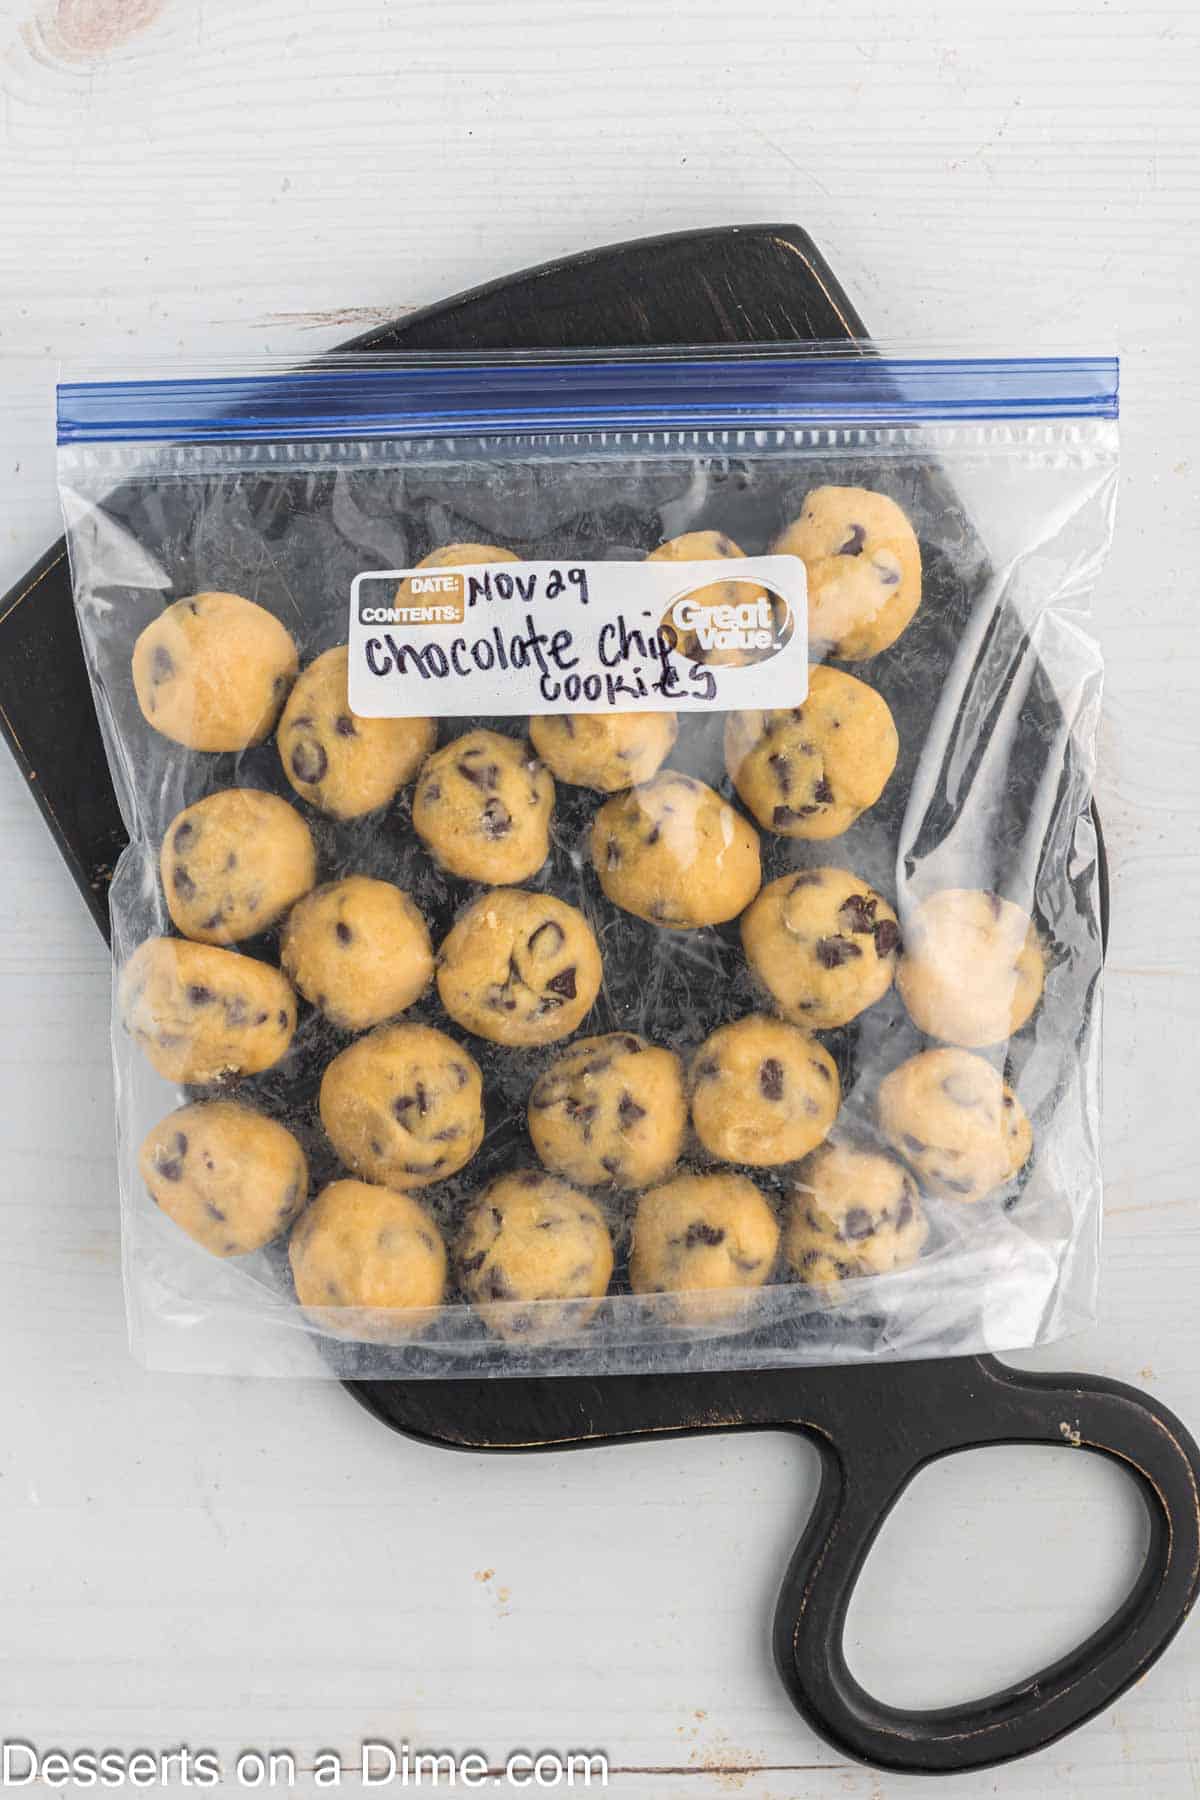 Cookie dough balls in a freezer bag